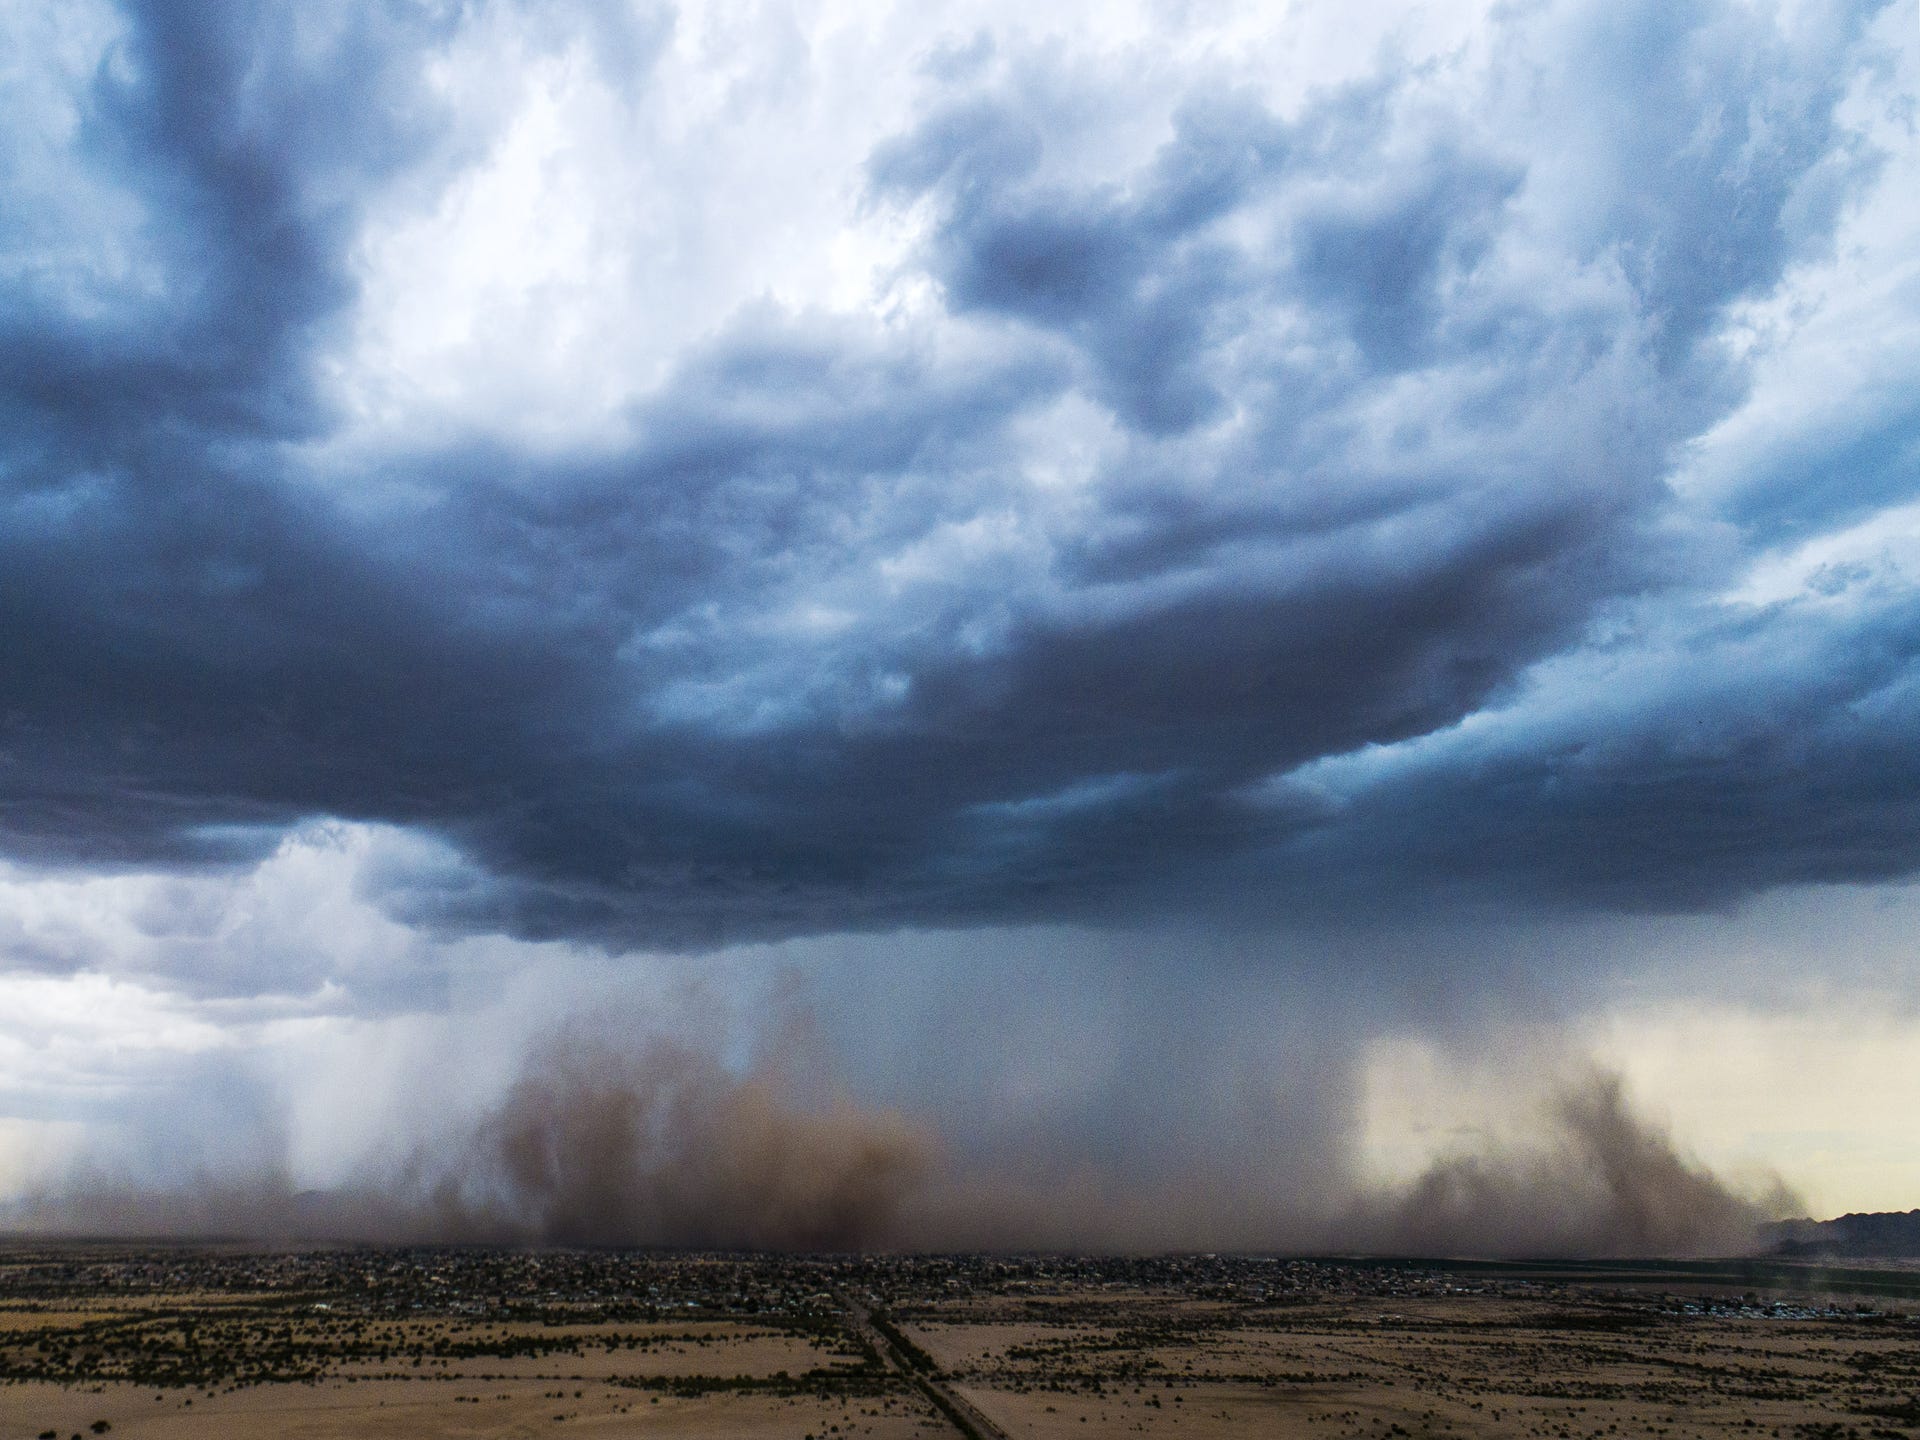 2019 Arizona monsoon season was one of the driest on record